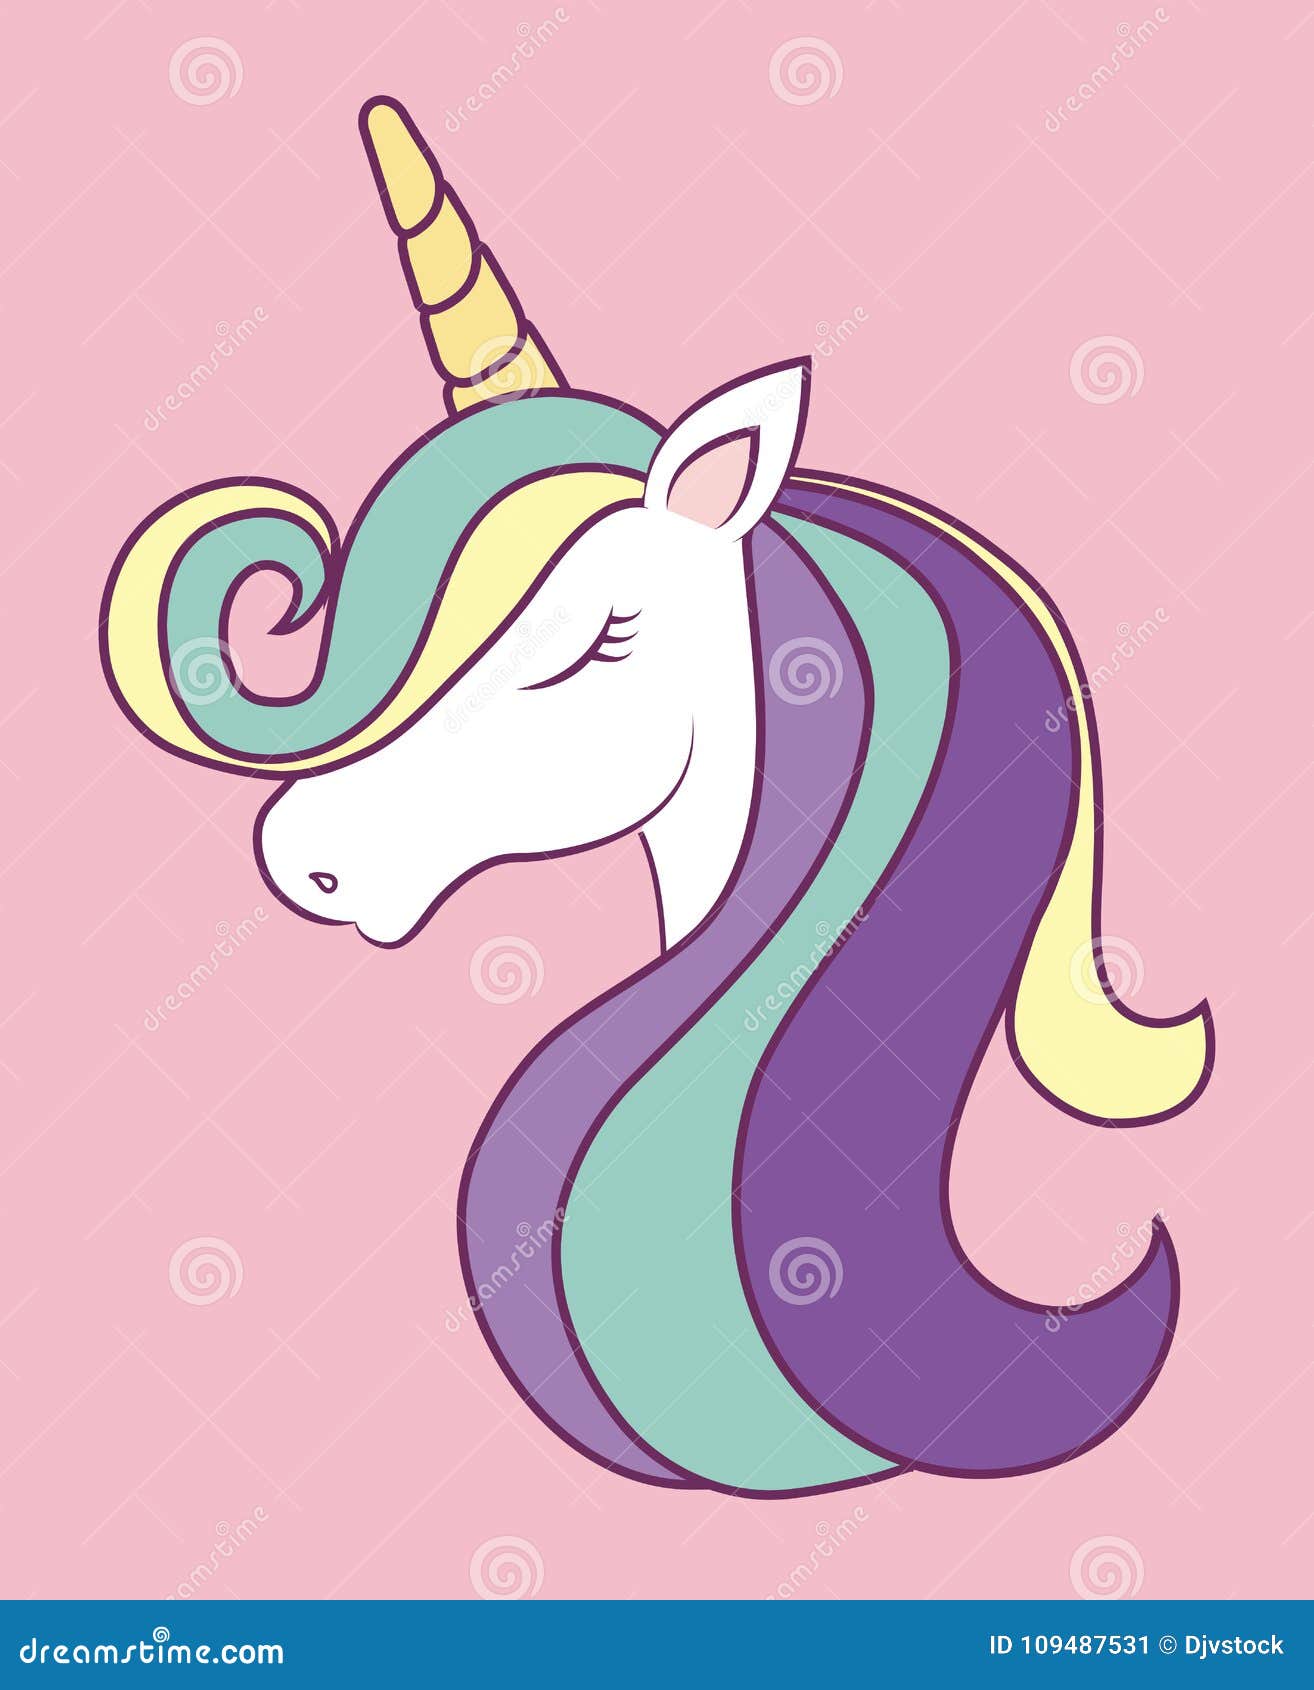 Magical unicorns design stock vector. Illustration of head - 109487531